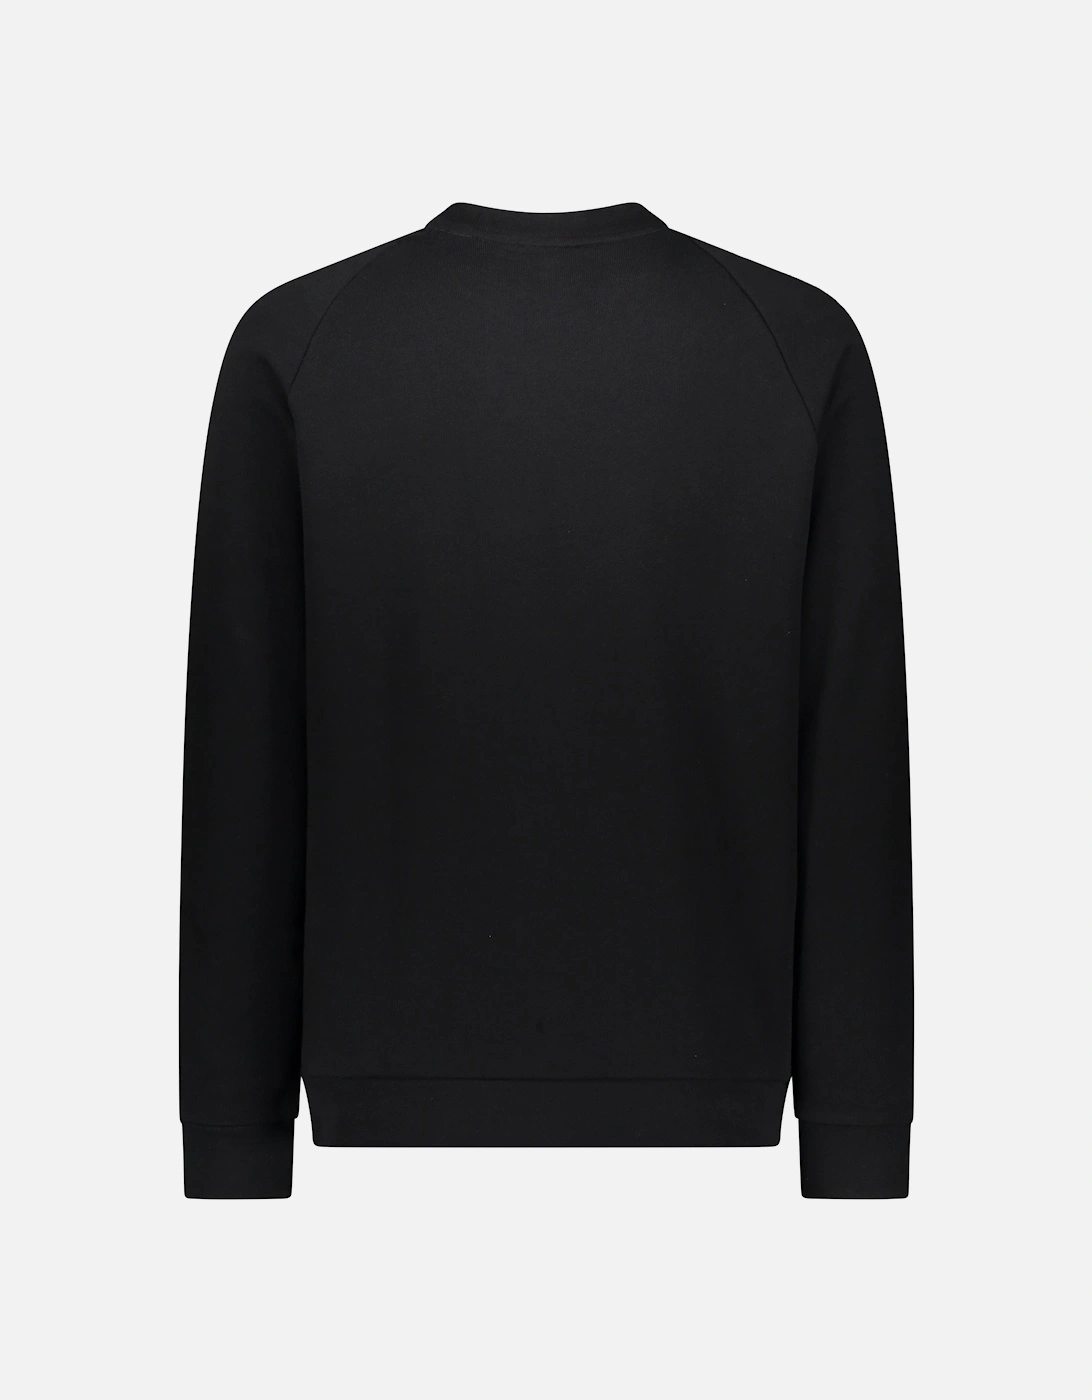 Originals Apparel Trefoil Crewneck Sweater - Black